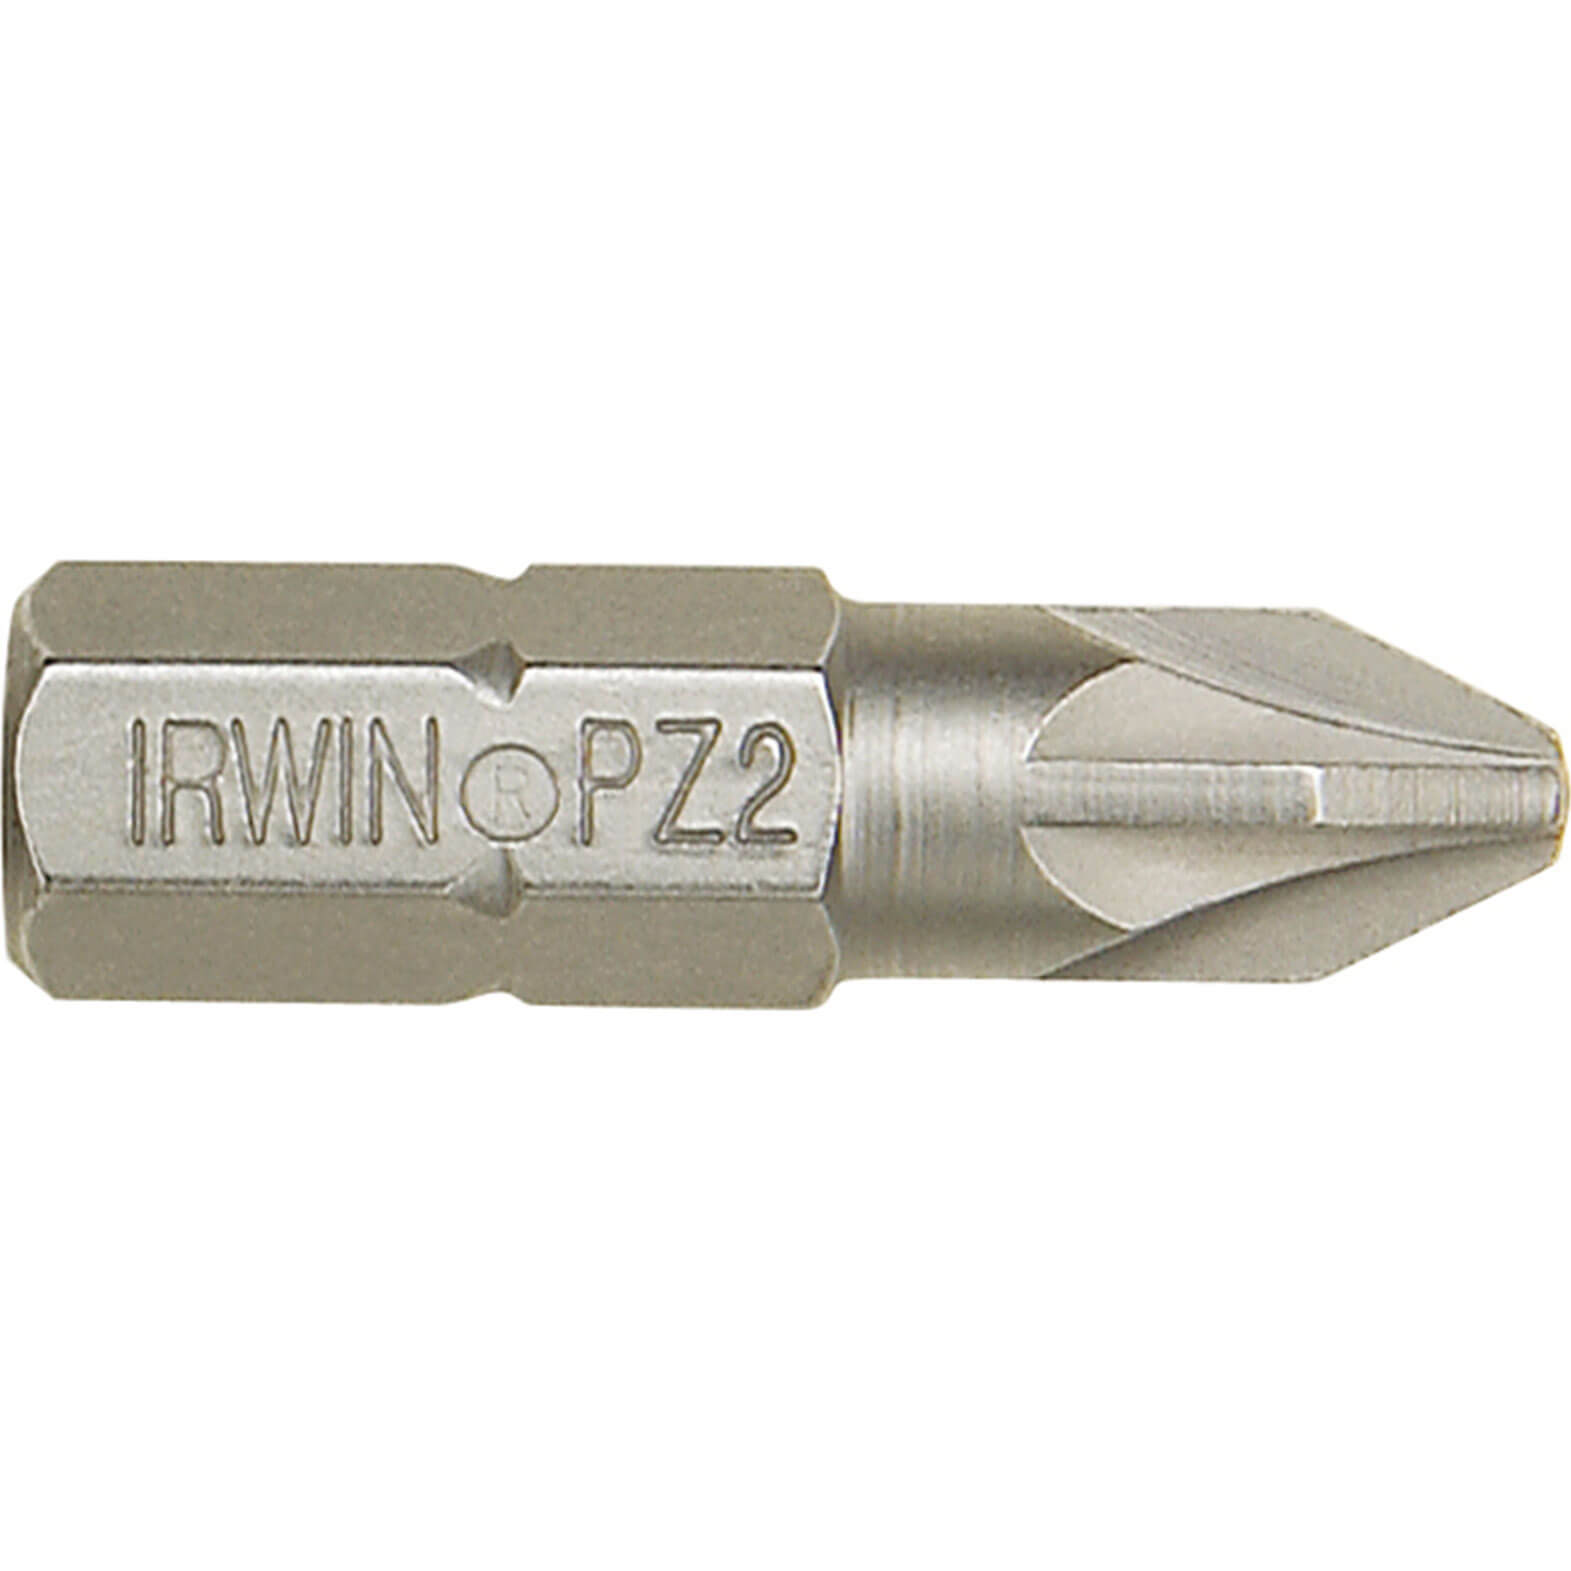 Photo of Irwin Pozi Screwdriver Bit Pz1 25mm Pack Of 2